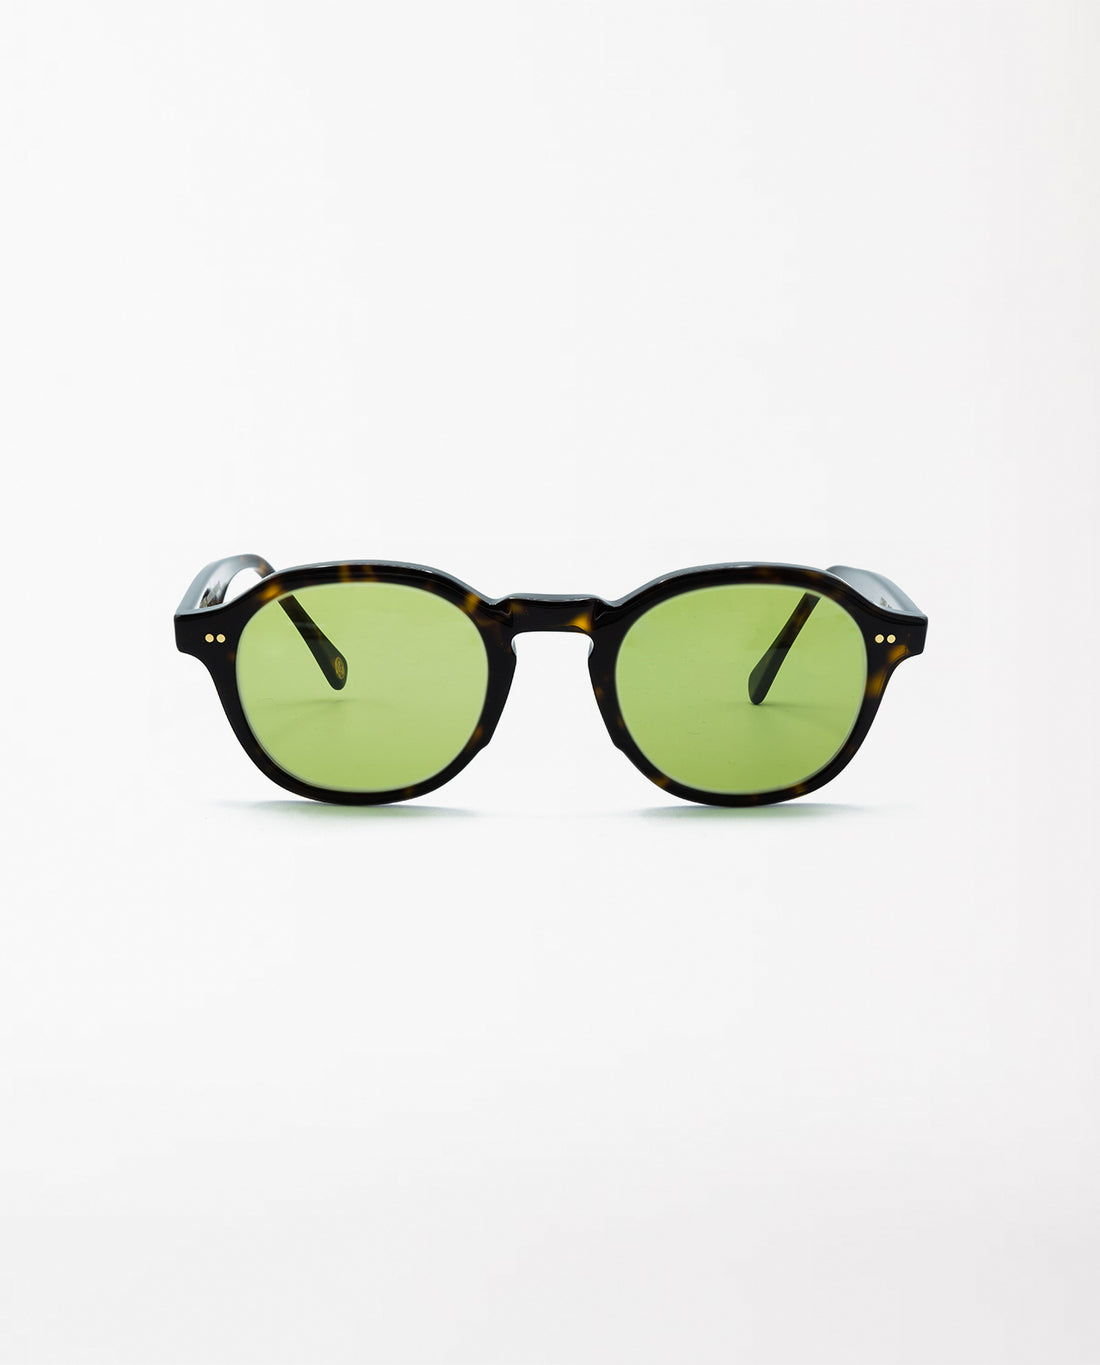 marché commun marlone eyewear lunettes solaires soleil origine france garantie cornell green tea écaille